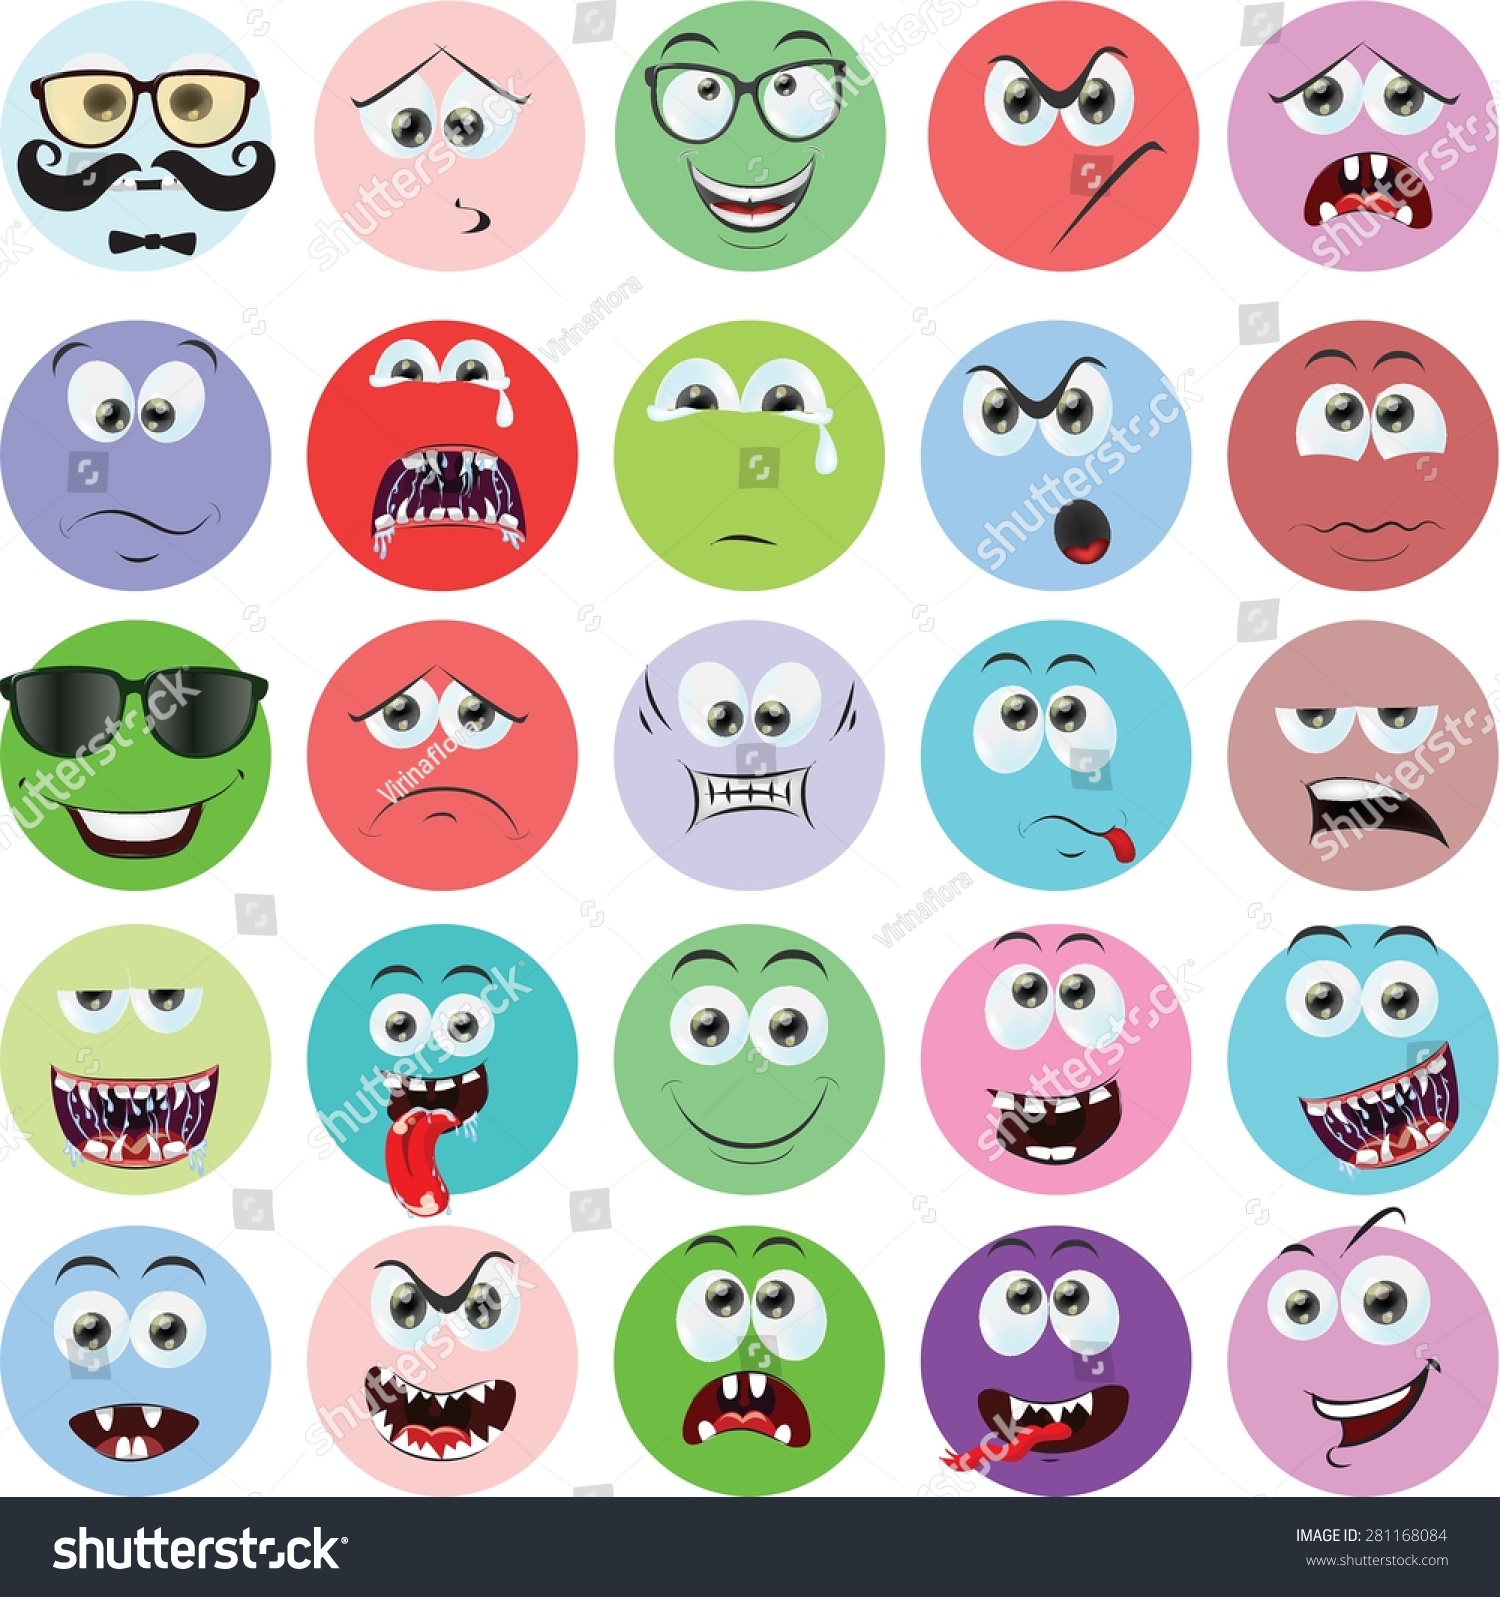 Set Cartoon Faces Different Emotions Stock Vector 281168084 - Shutterstock